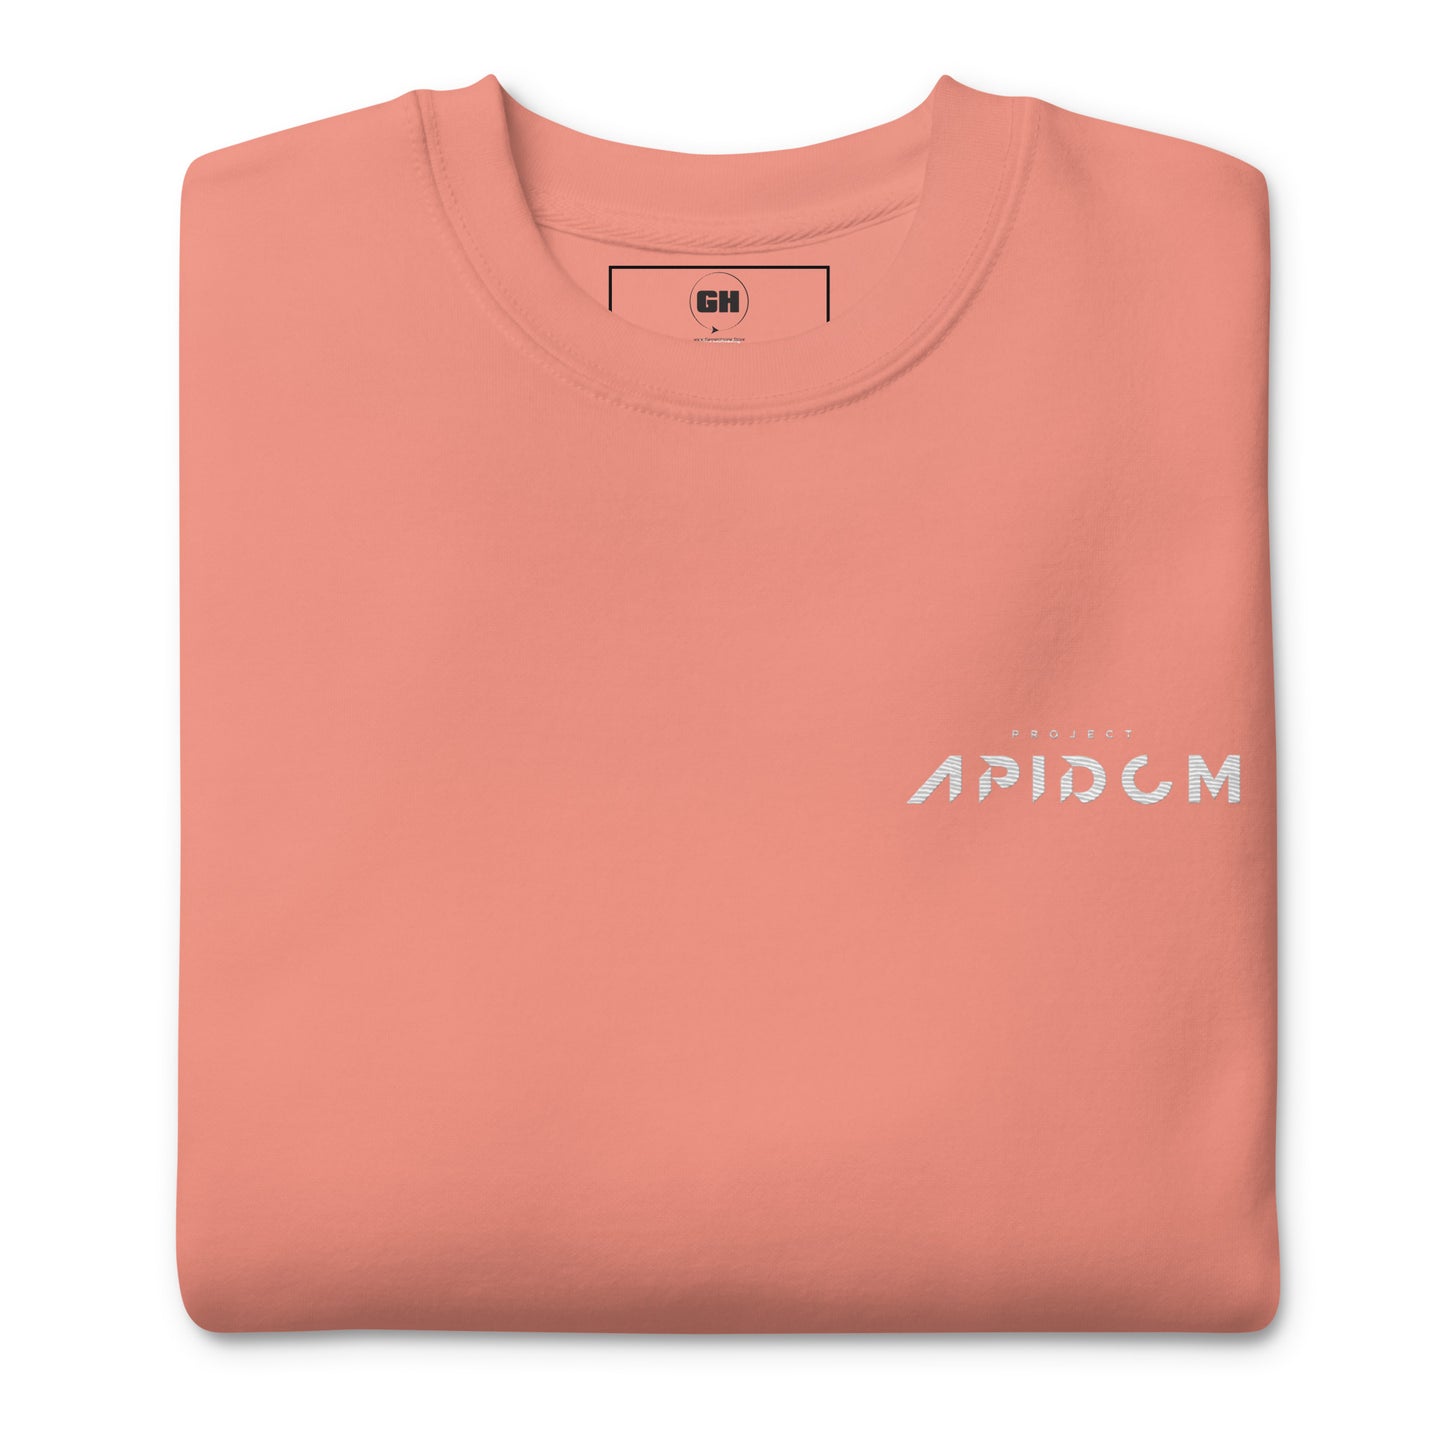 Project_Apidom_Unisex Premium Sweatshirt